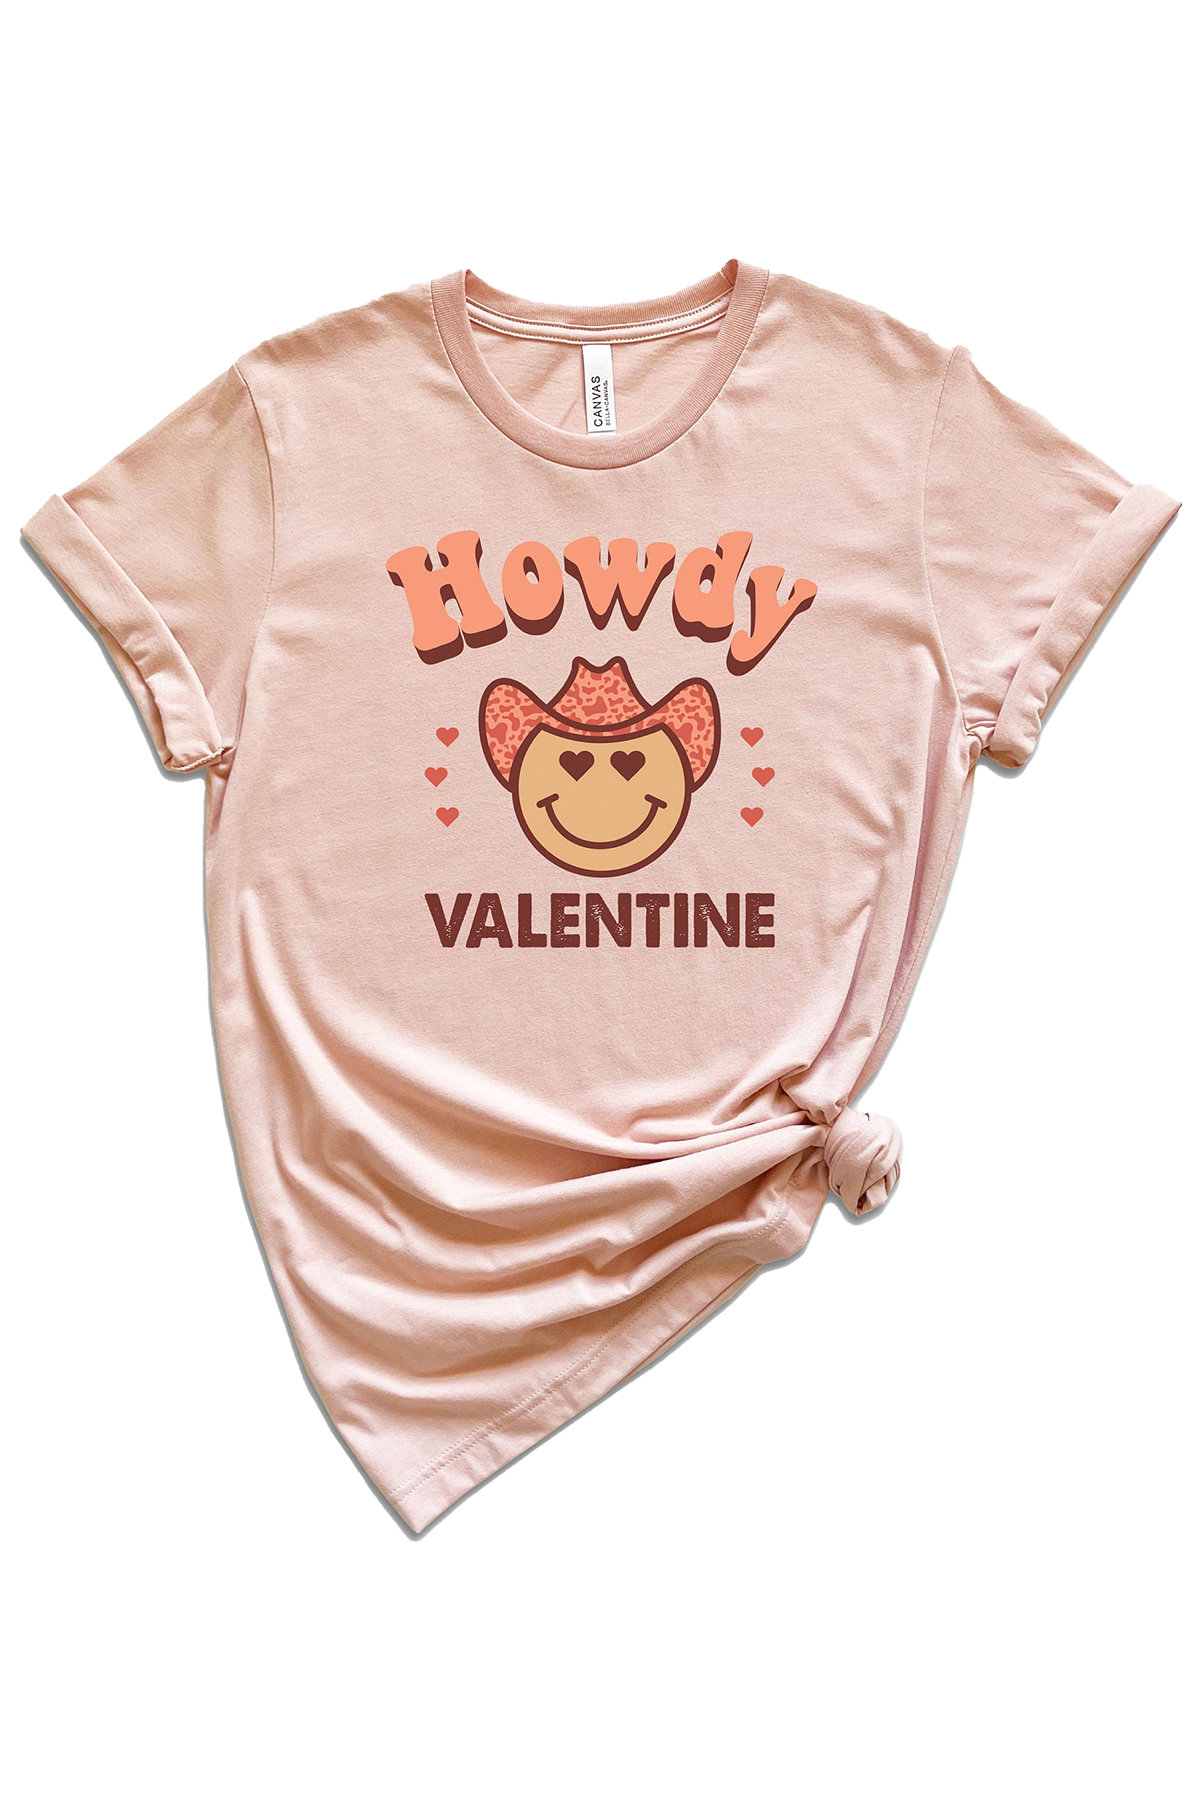 Sunshine Apparel, Howdy Valentine Shirt